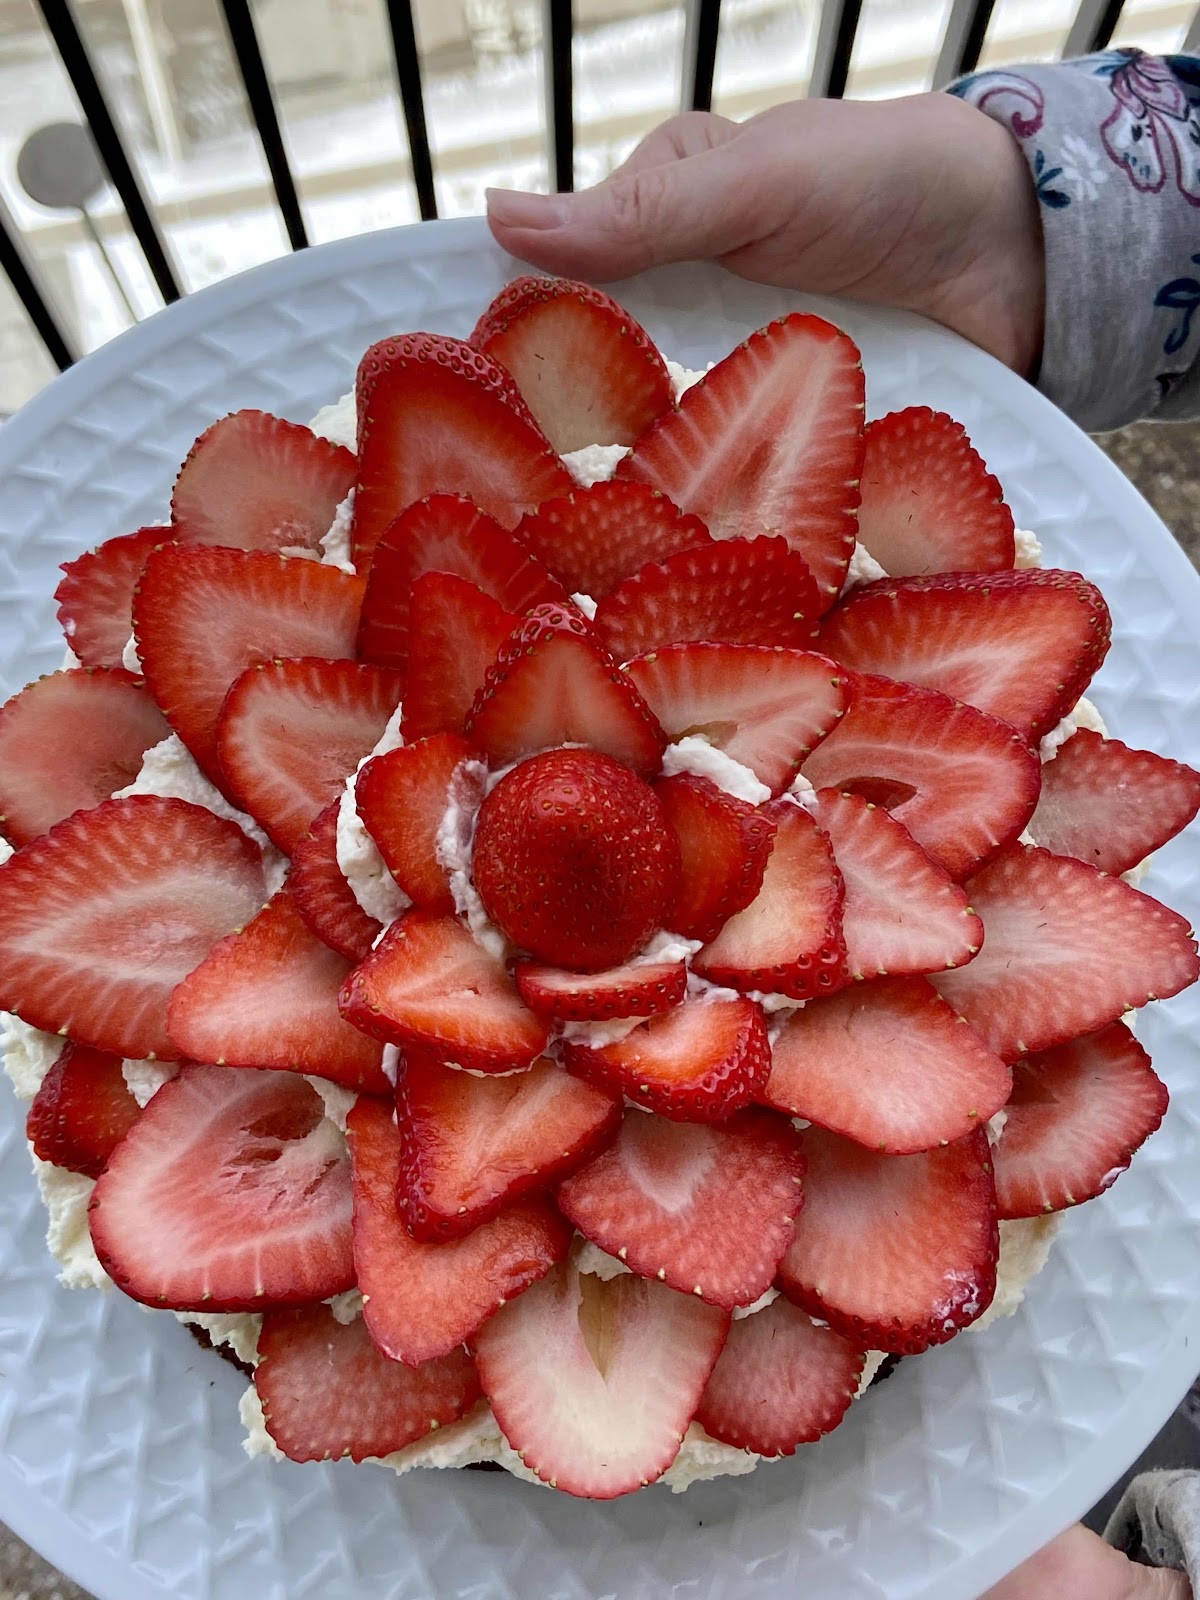 Flower Design with strawberries